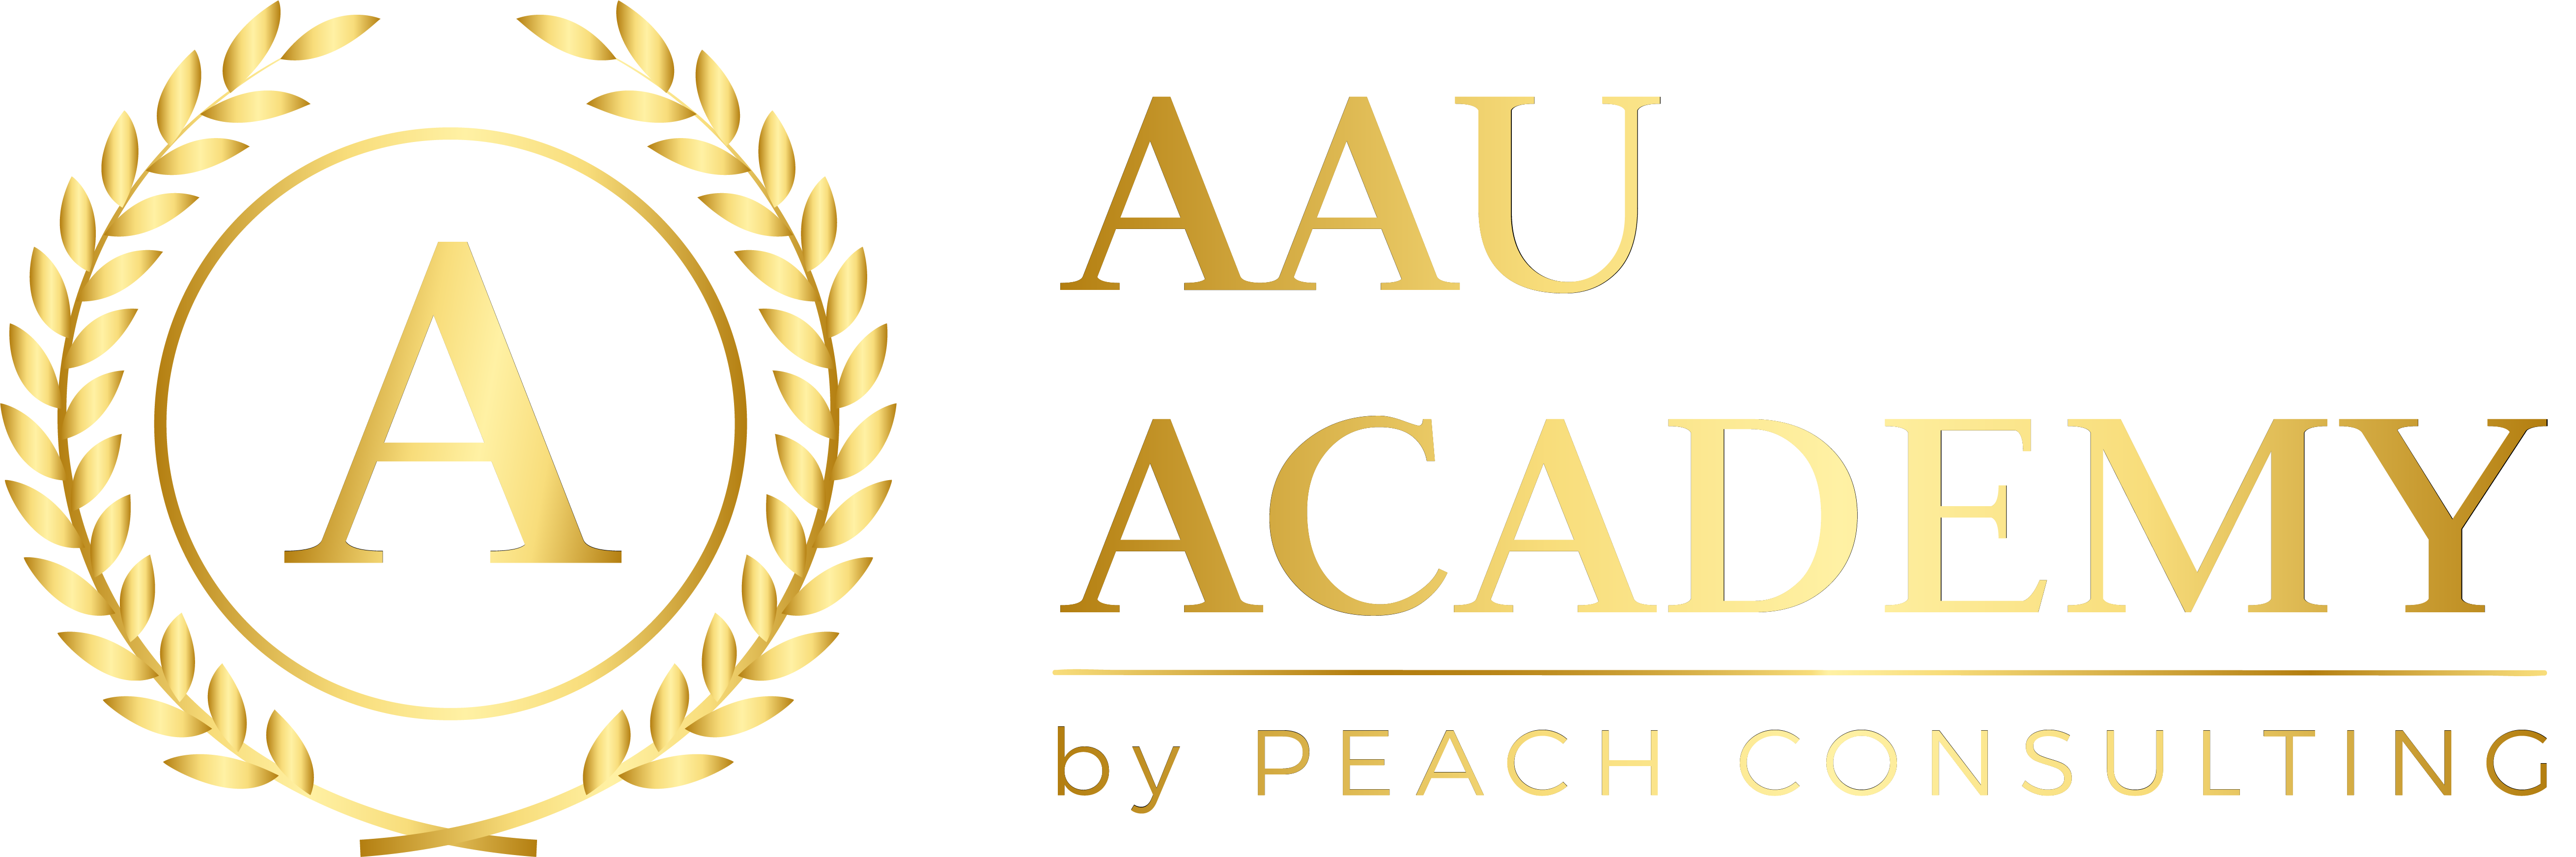 AAU Academy